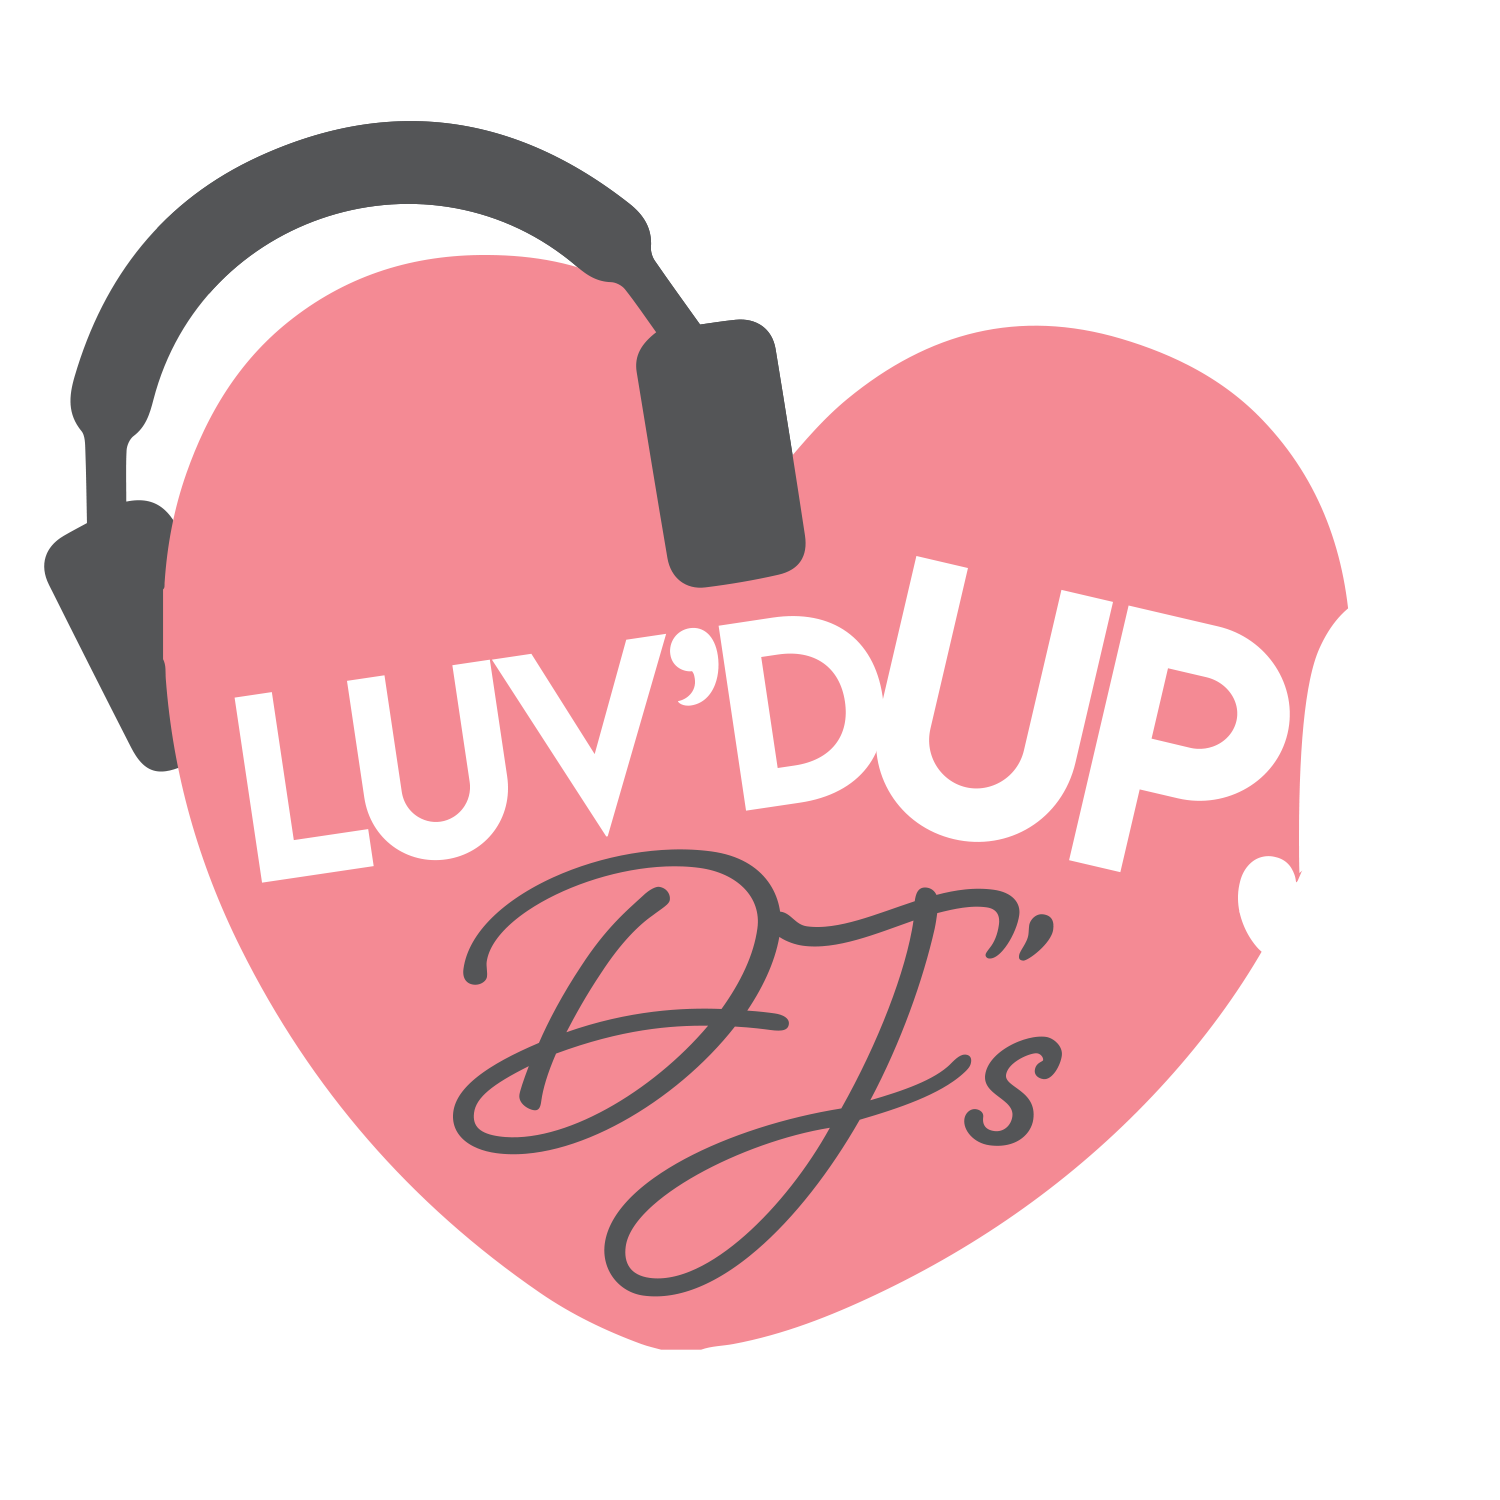 Luvdup DJs- Female DJ agency